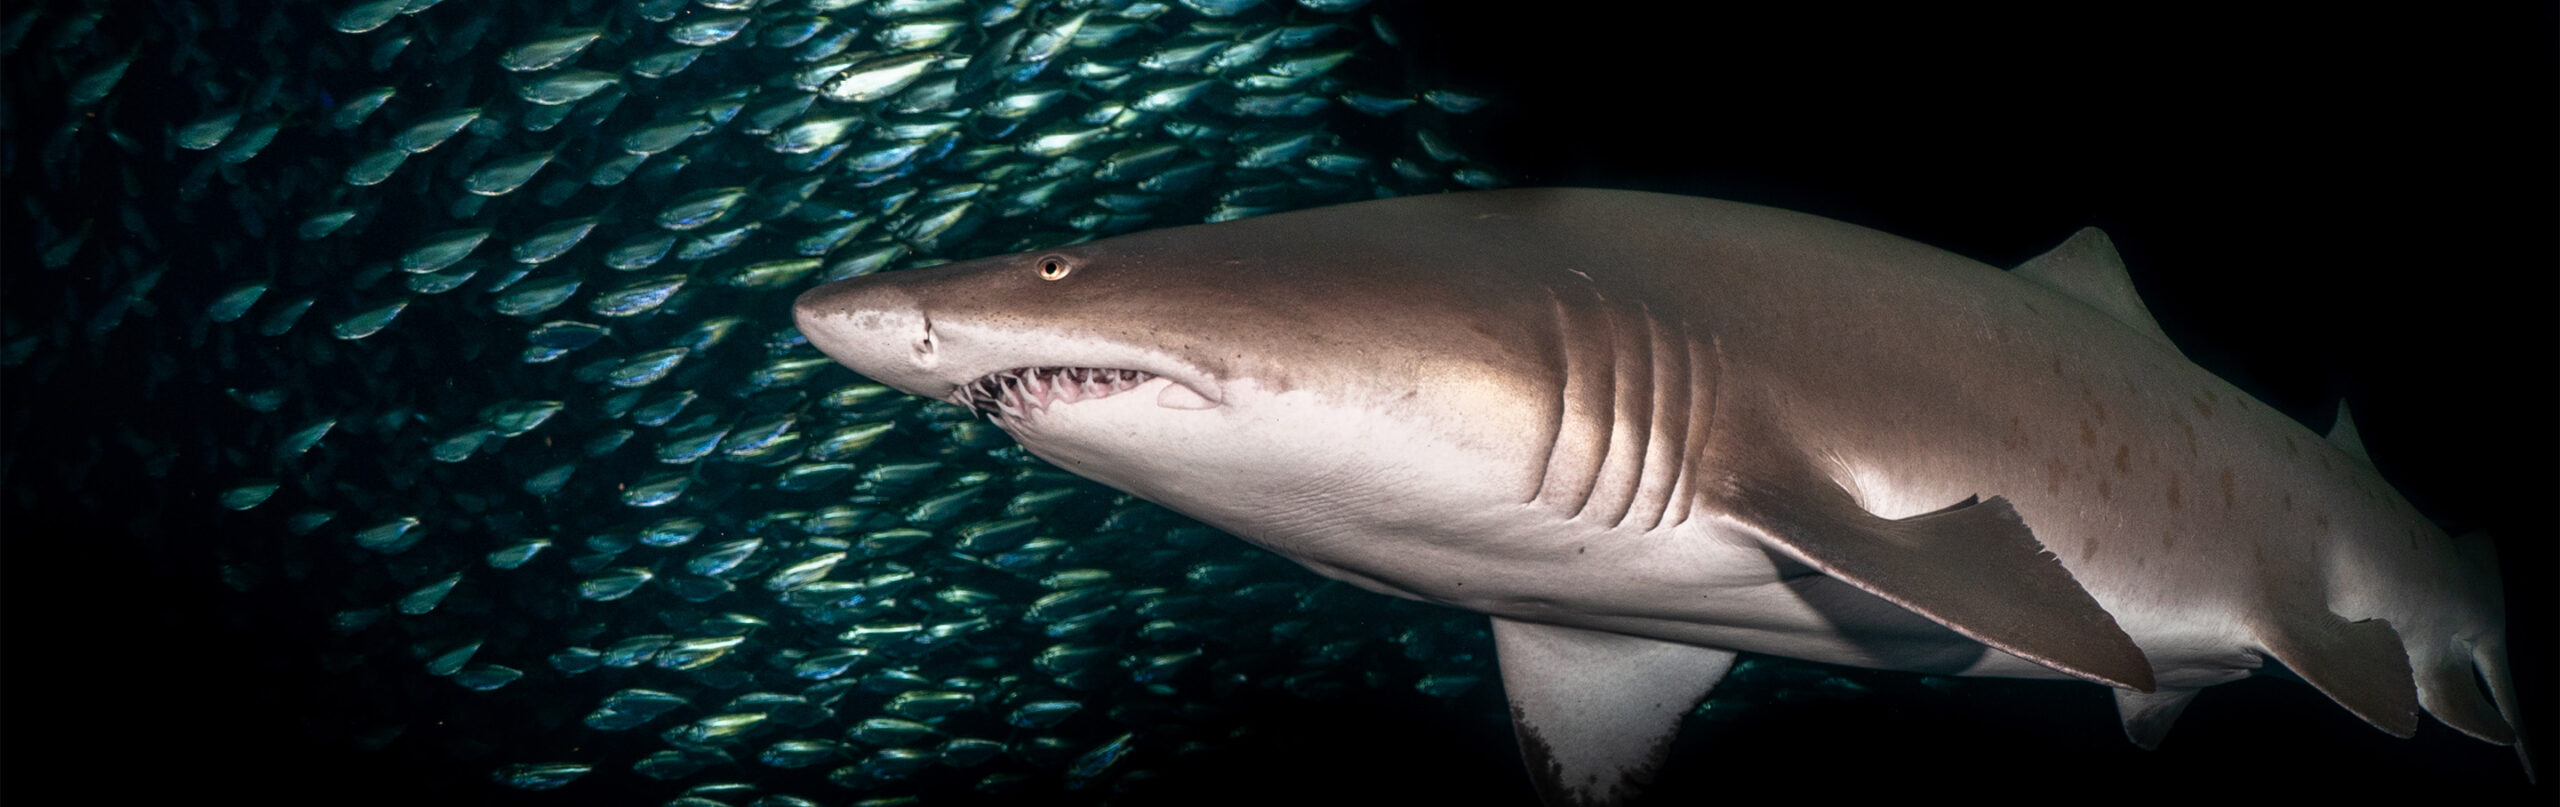 Sand tiger shark, Descriptions, Types, Diet, & Facts